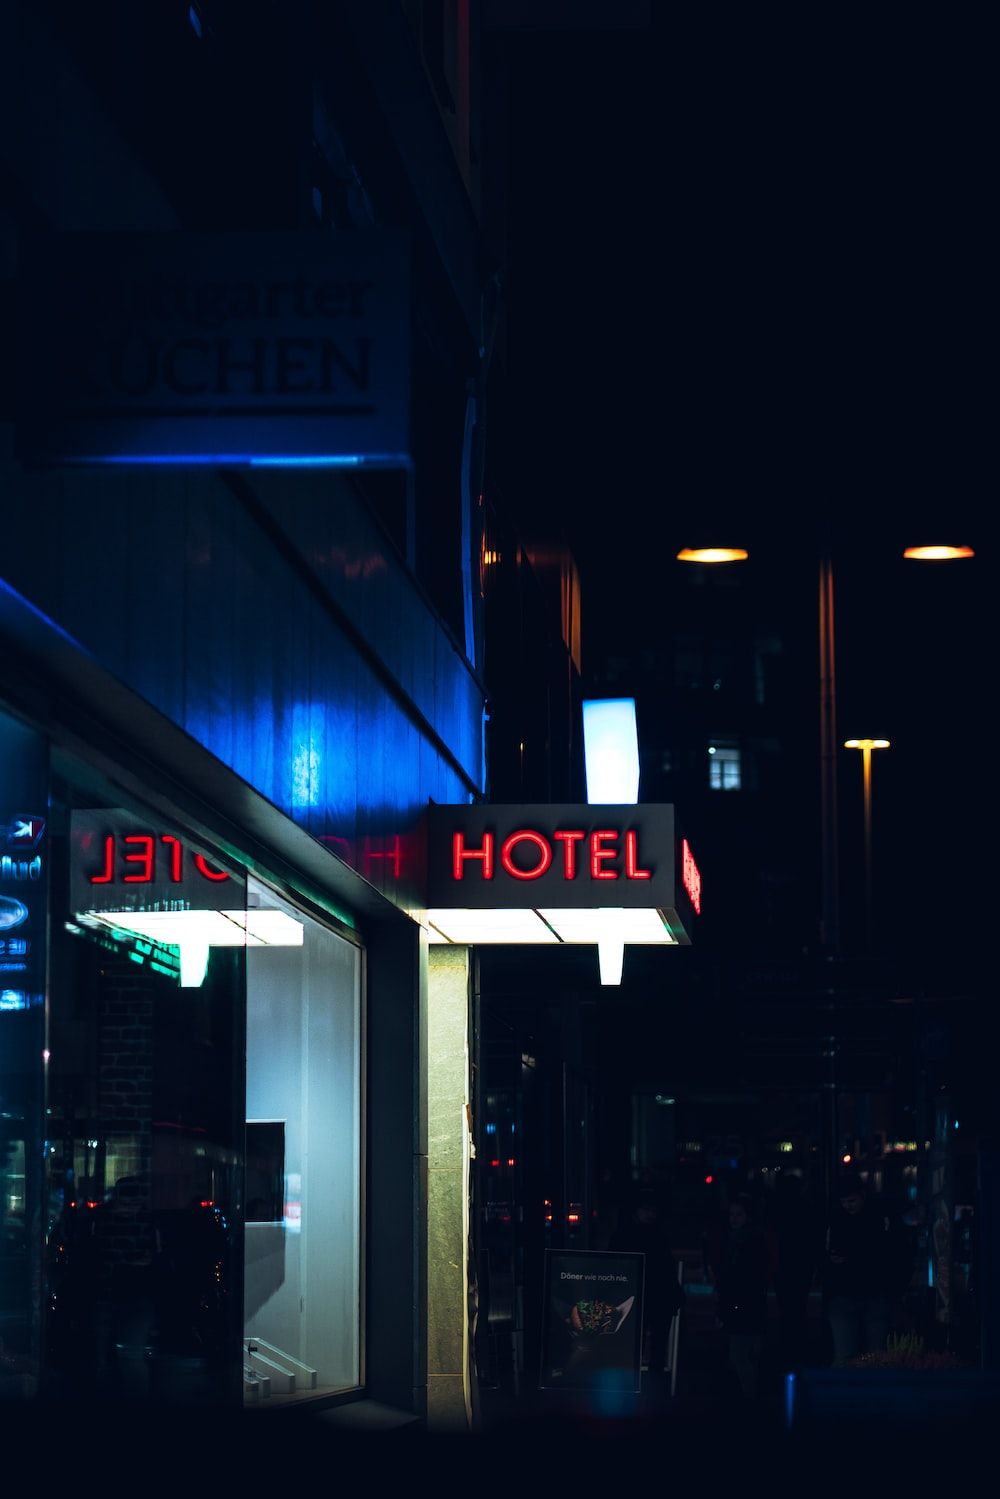  VfB Stuttgart Hintergrundbild 1000x1499. A hotel sign is lit up at night photo